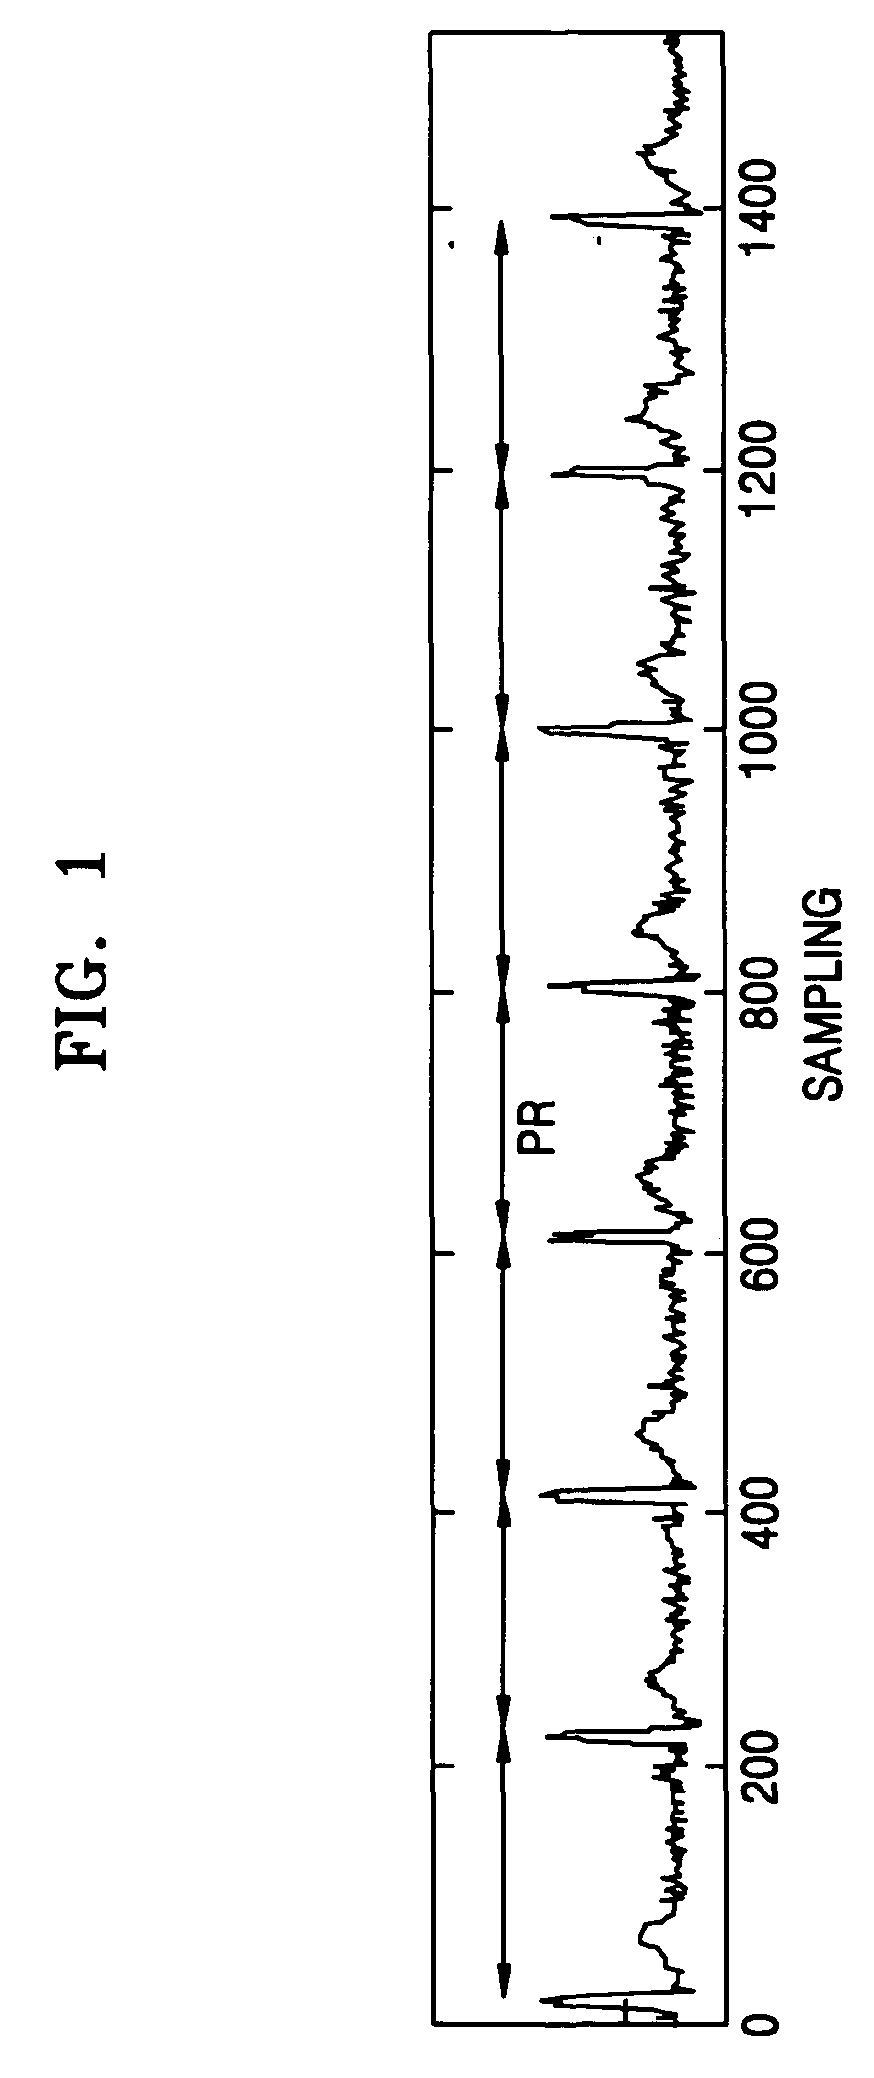 Bio signal measuring apparatus and method